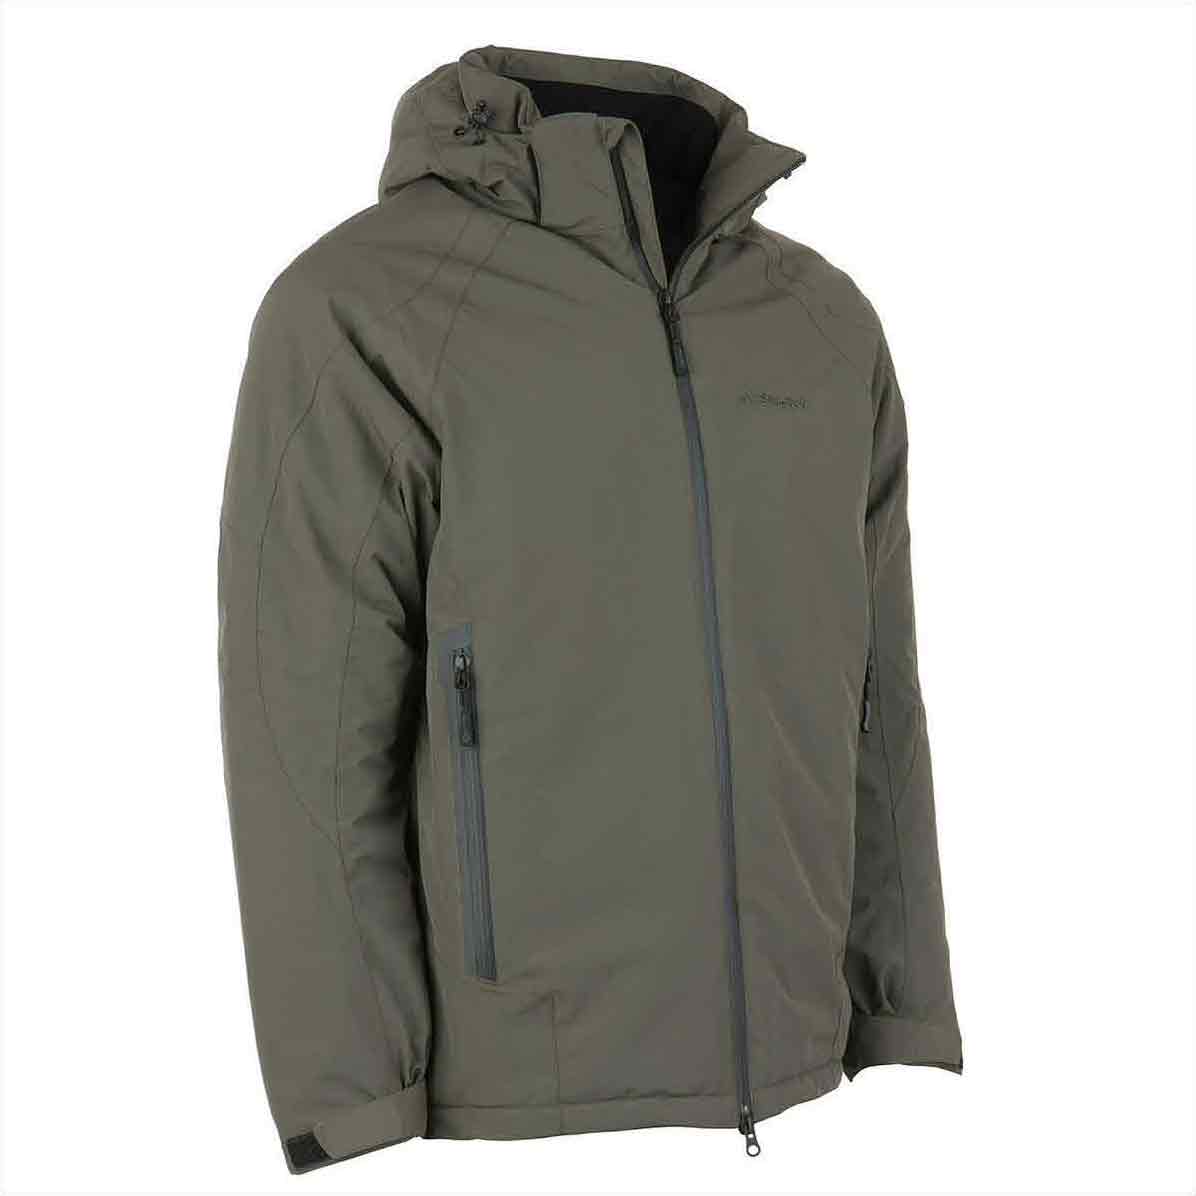 Snugpak Torrent Waterproof Insulated Forest Green Jacket - John Bull Clothing